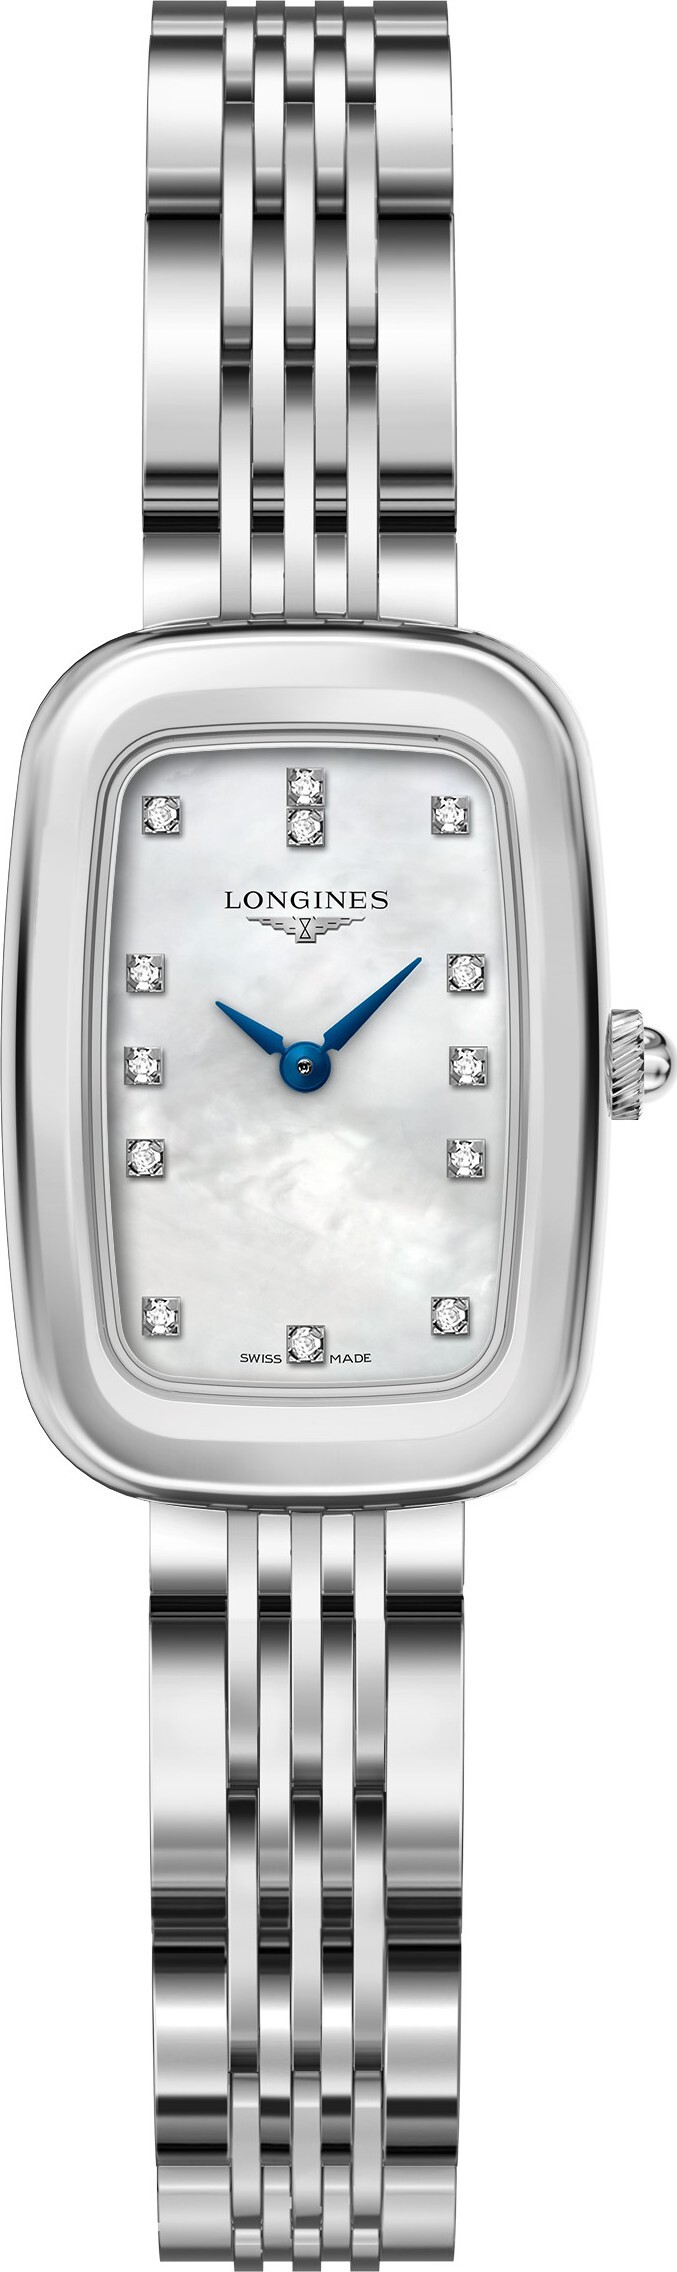 Đồng hồ nữ Longines L6.140.4.87.6